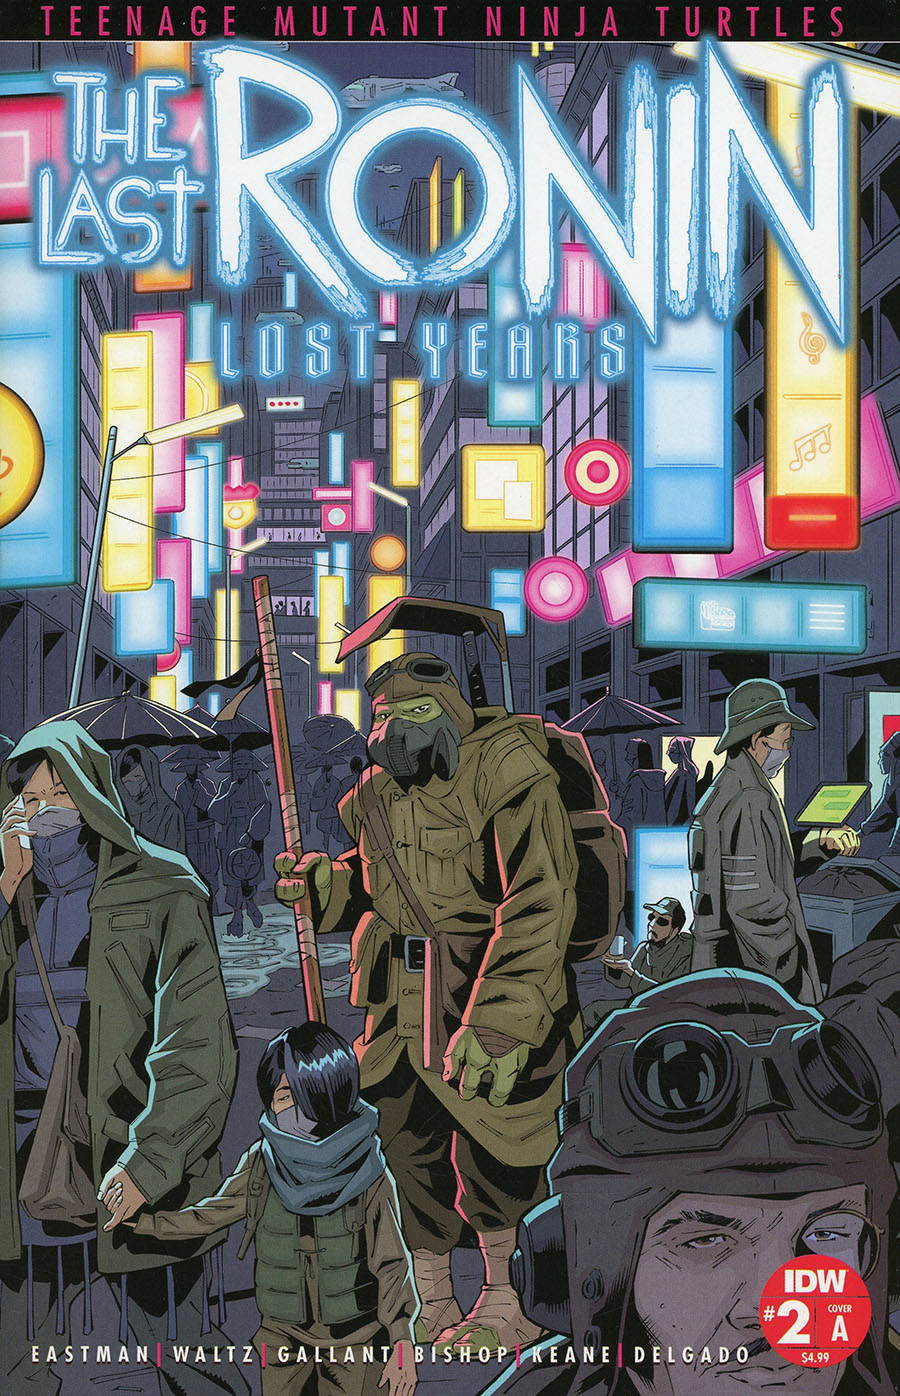 Teenage Mutant Ninja Turtles The Last Ronin The Lost Years #2 Cover A Regular SL Gallant Cover